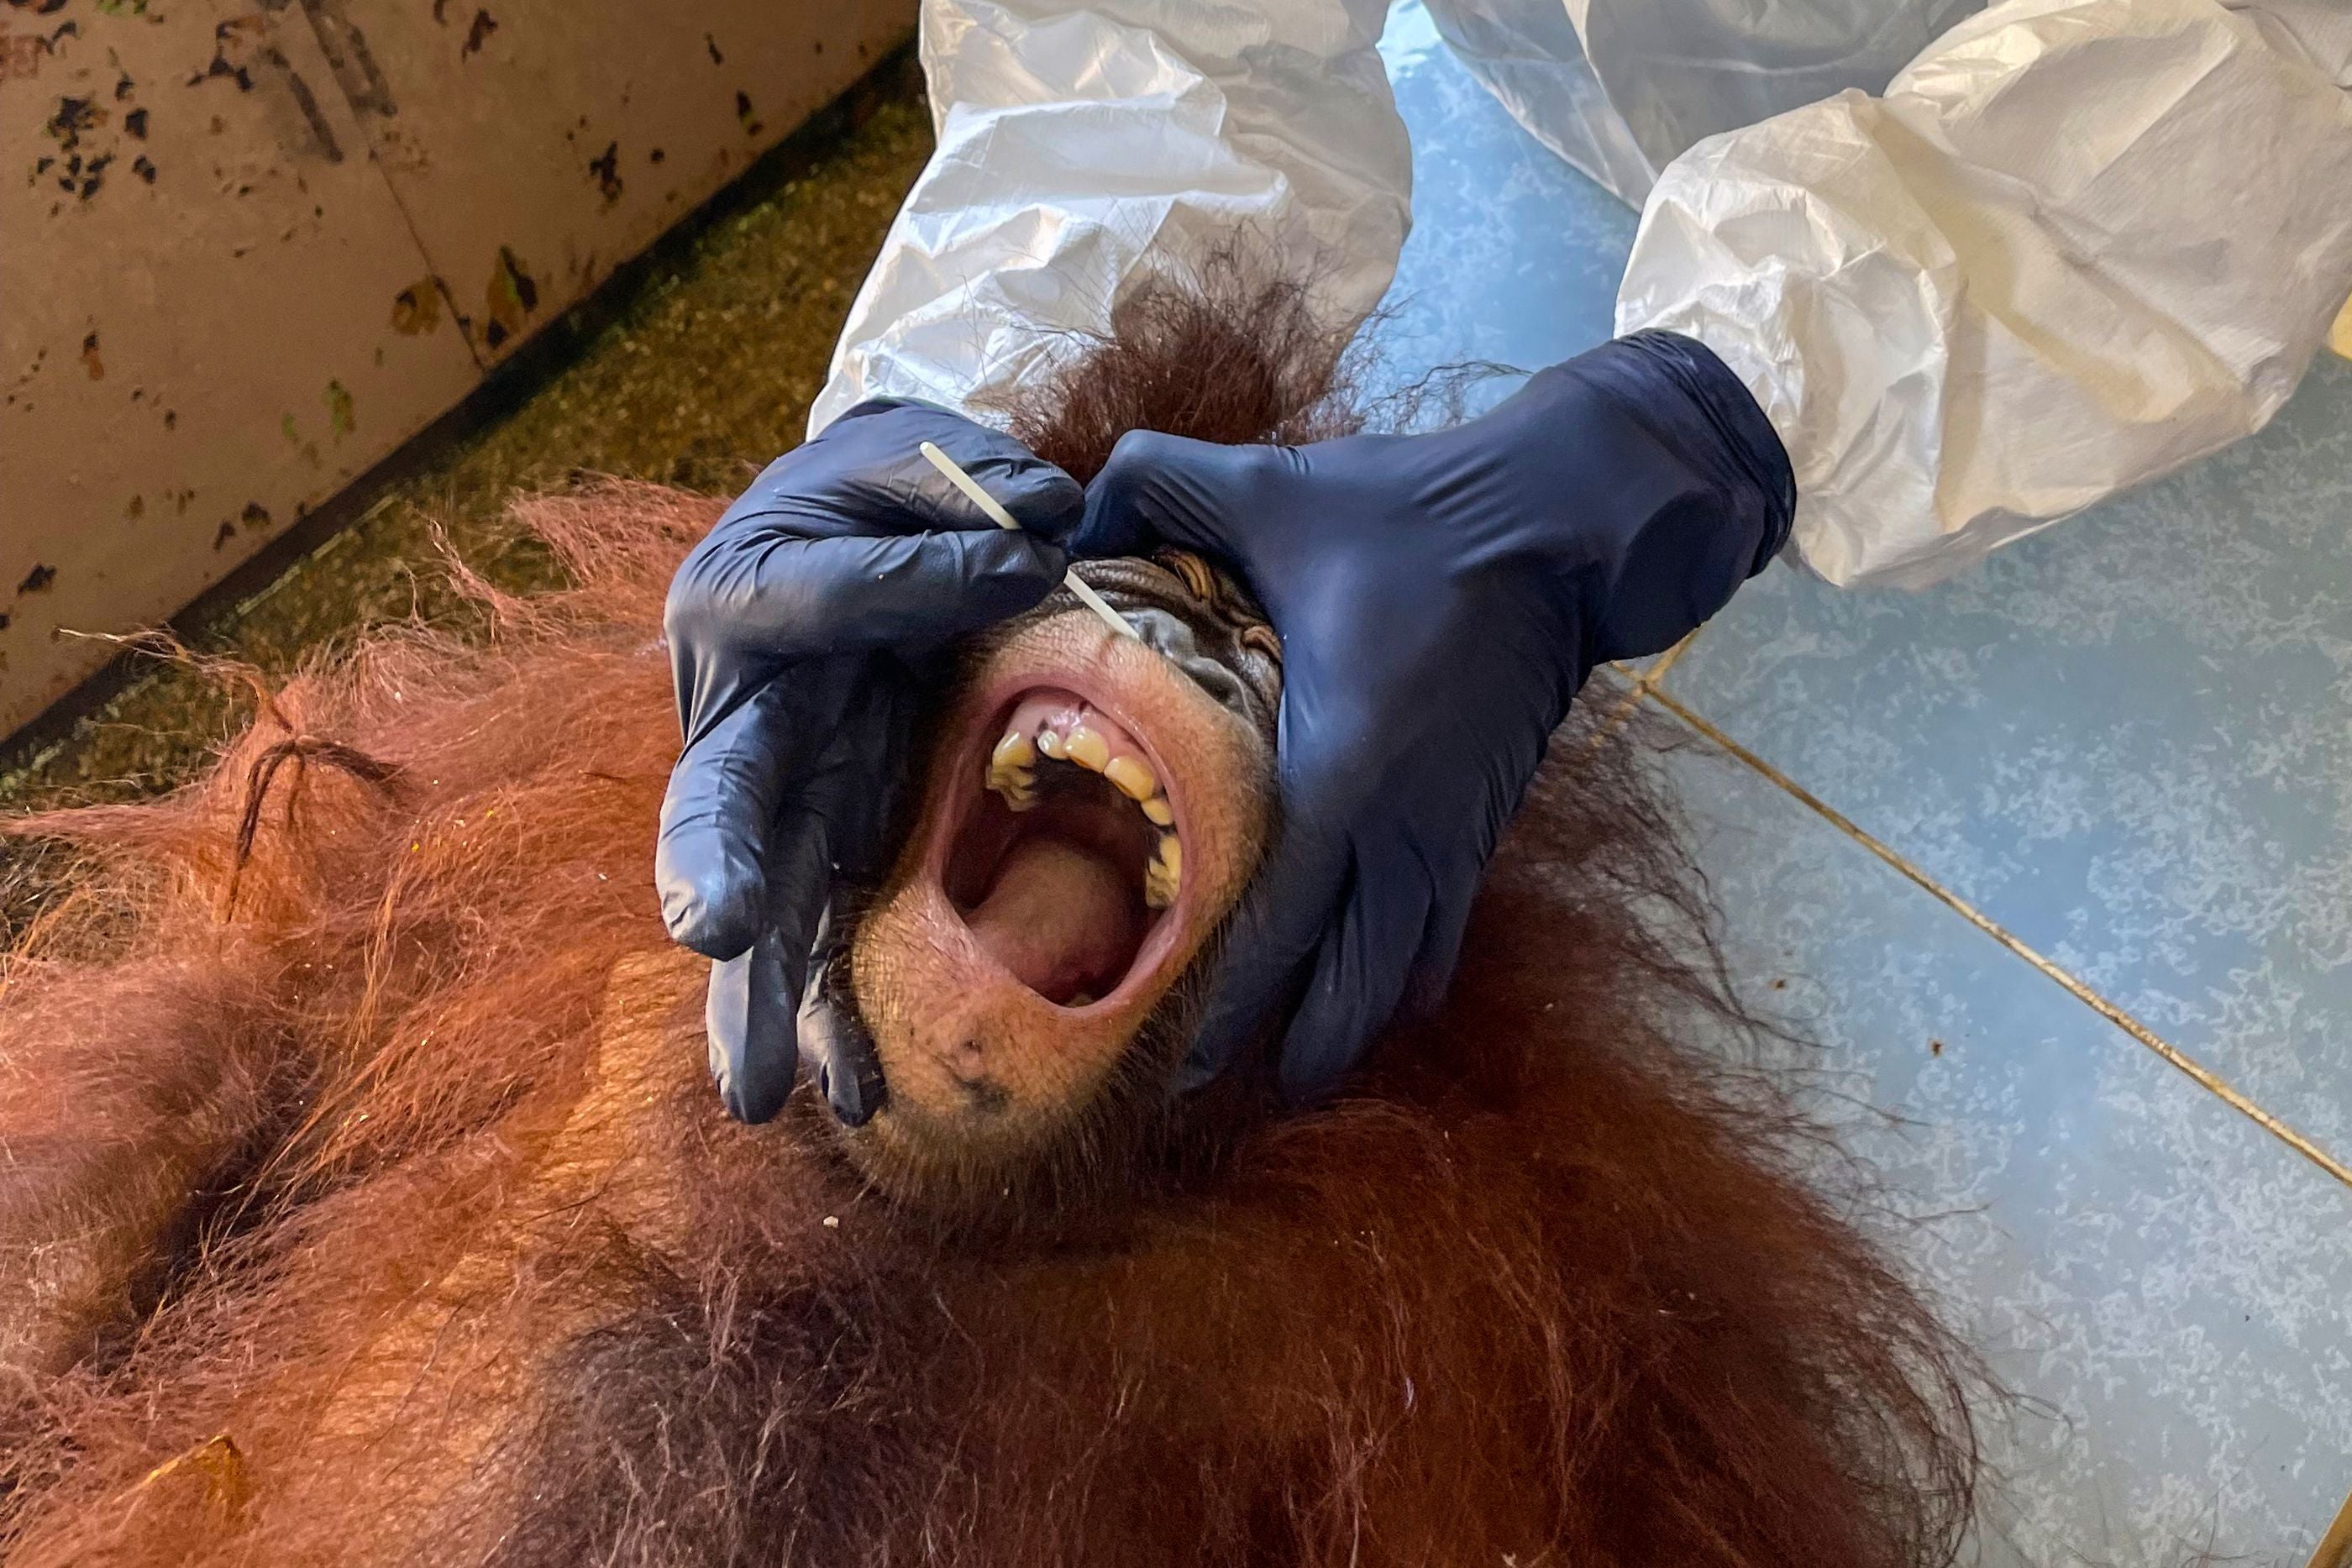 An orangutan gets tested for Covid-19 in Malaysia